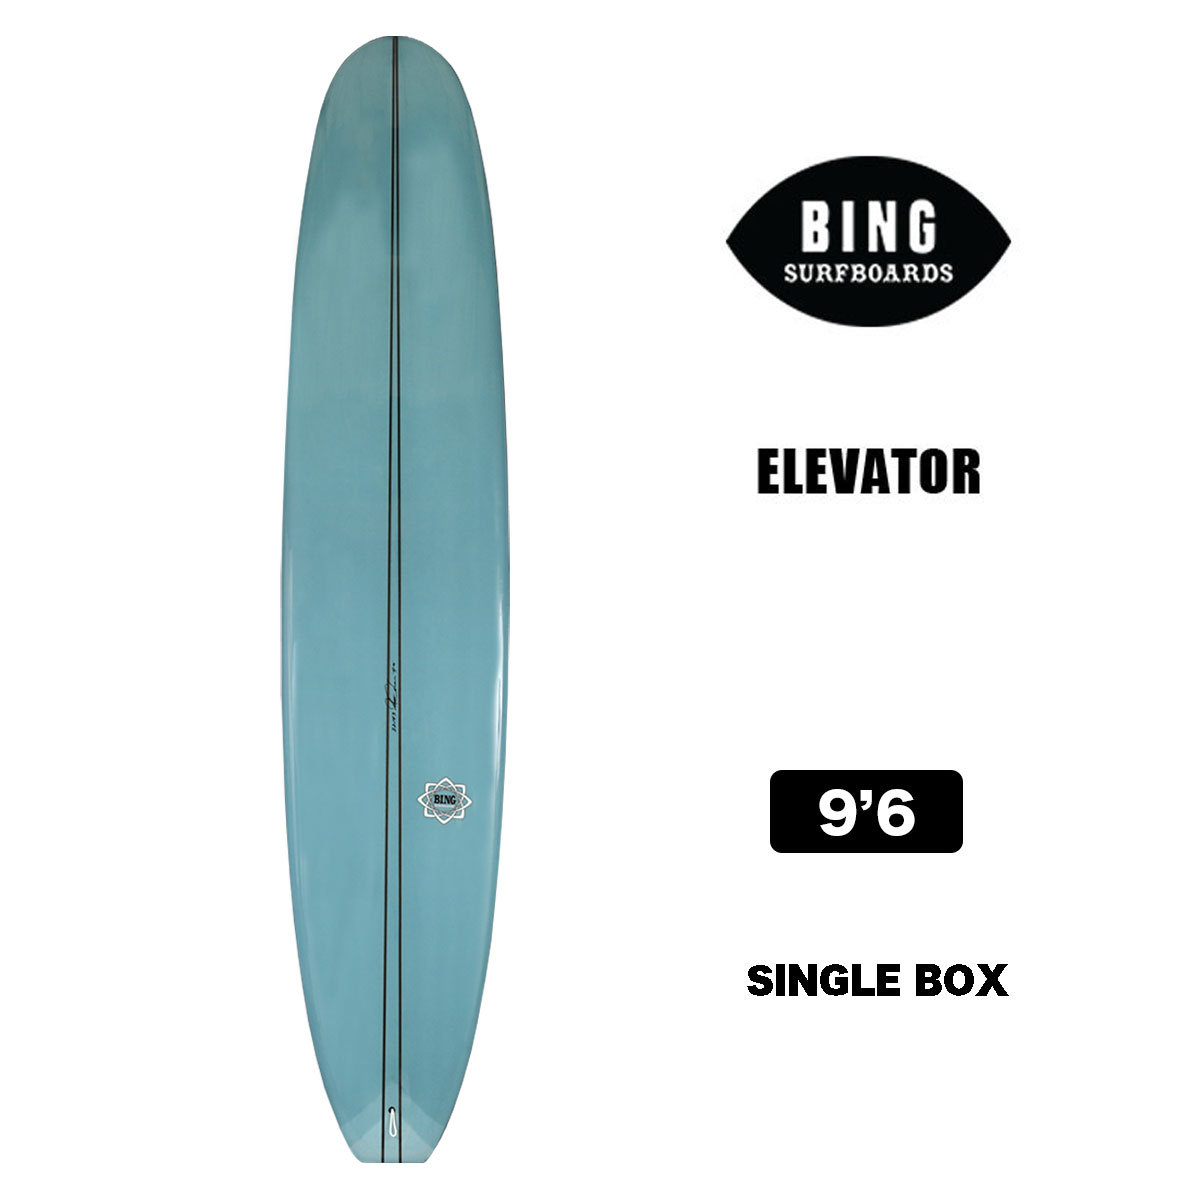 SurfBoardNet / ブランド:BING SURFBOARDS モデル:ELEVATOR